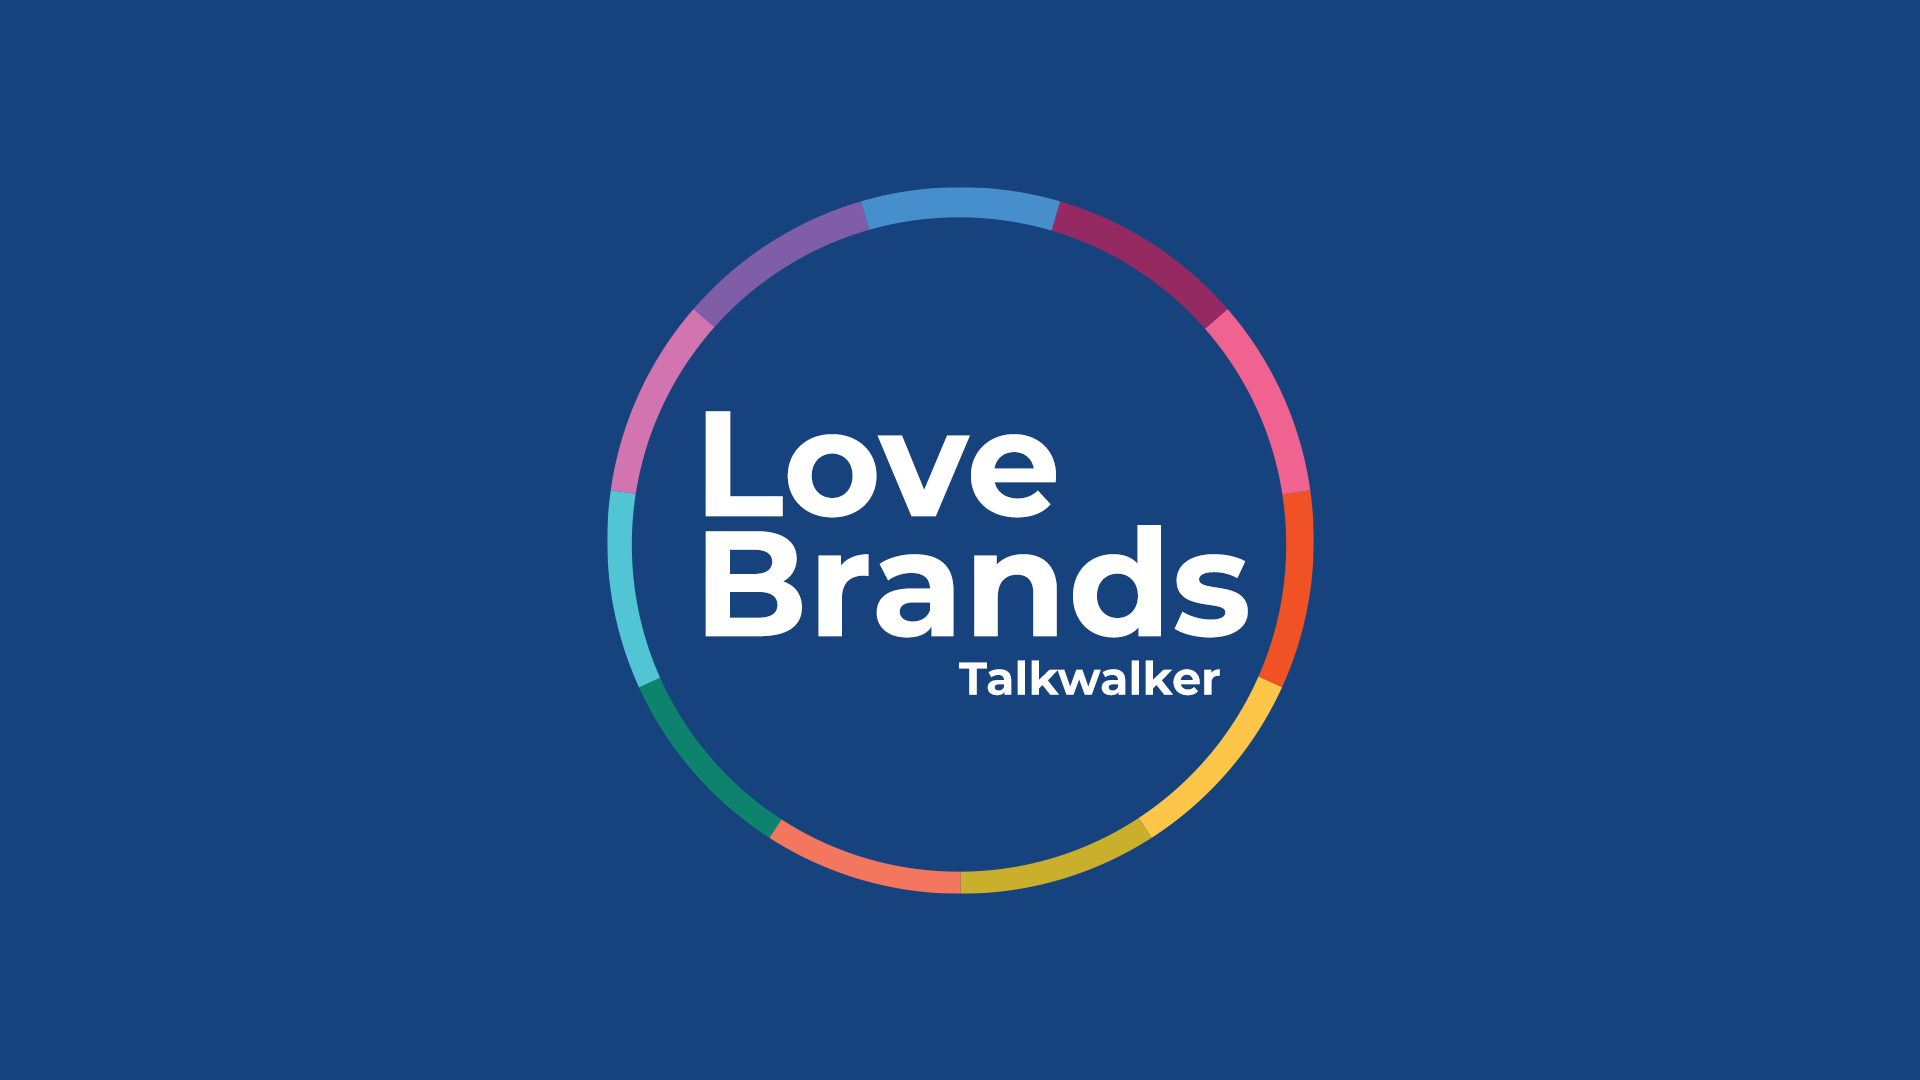 Talkwalker reveals the most loved brands for 2021